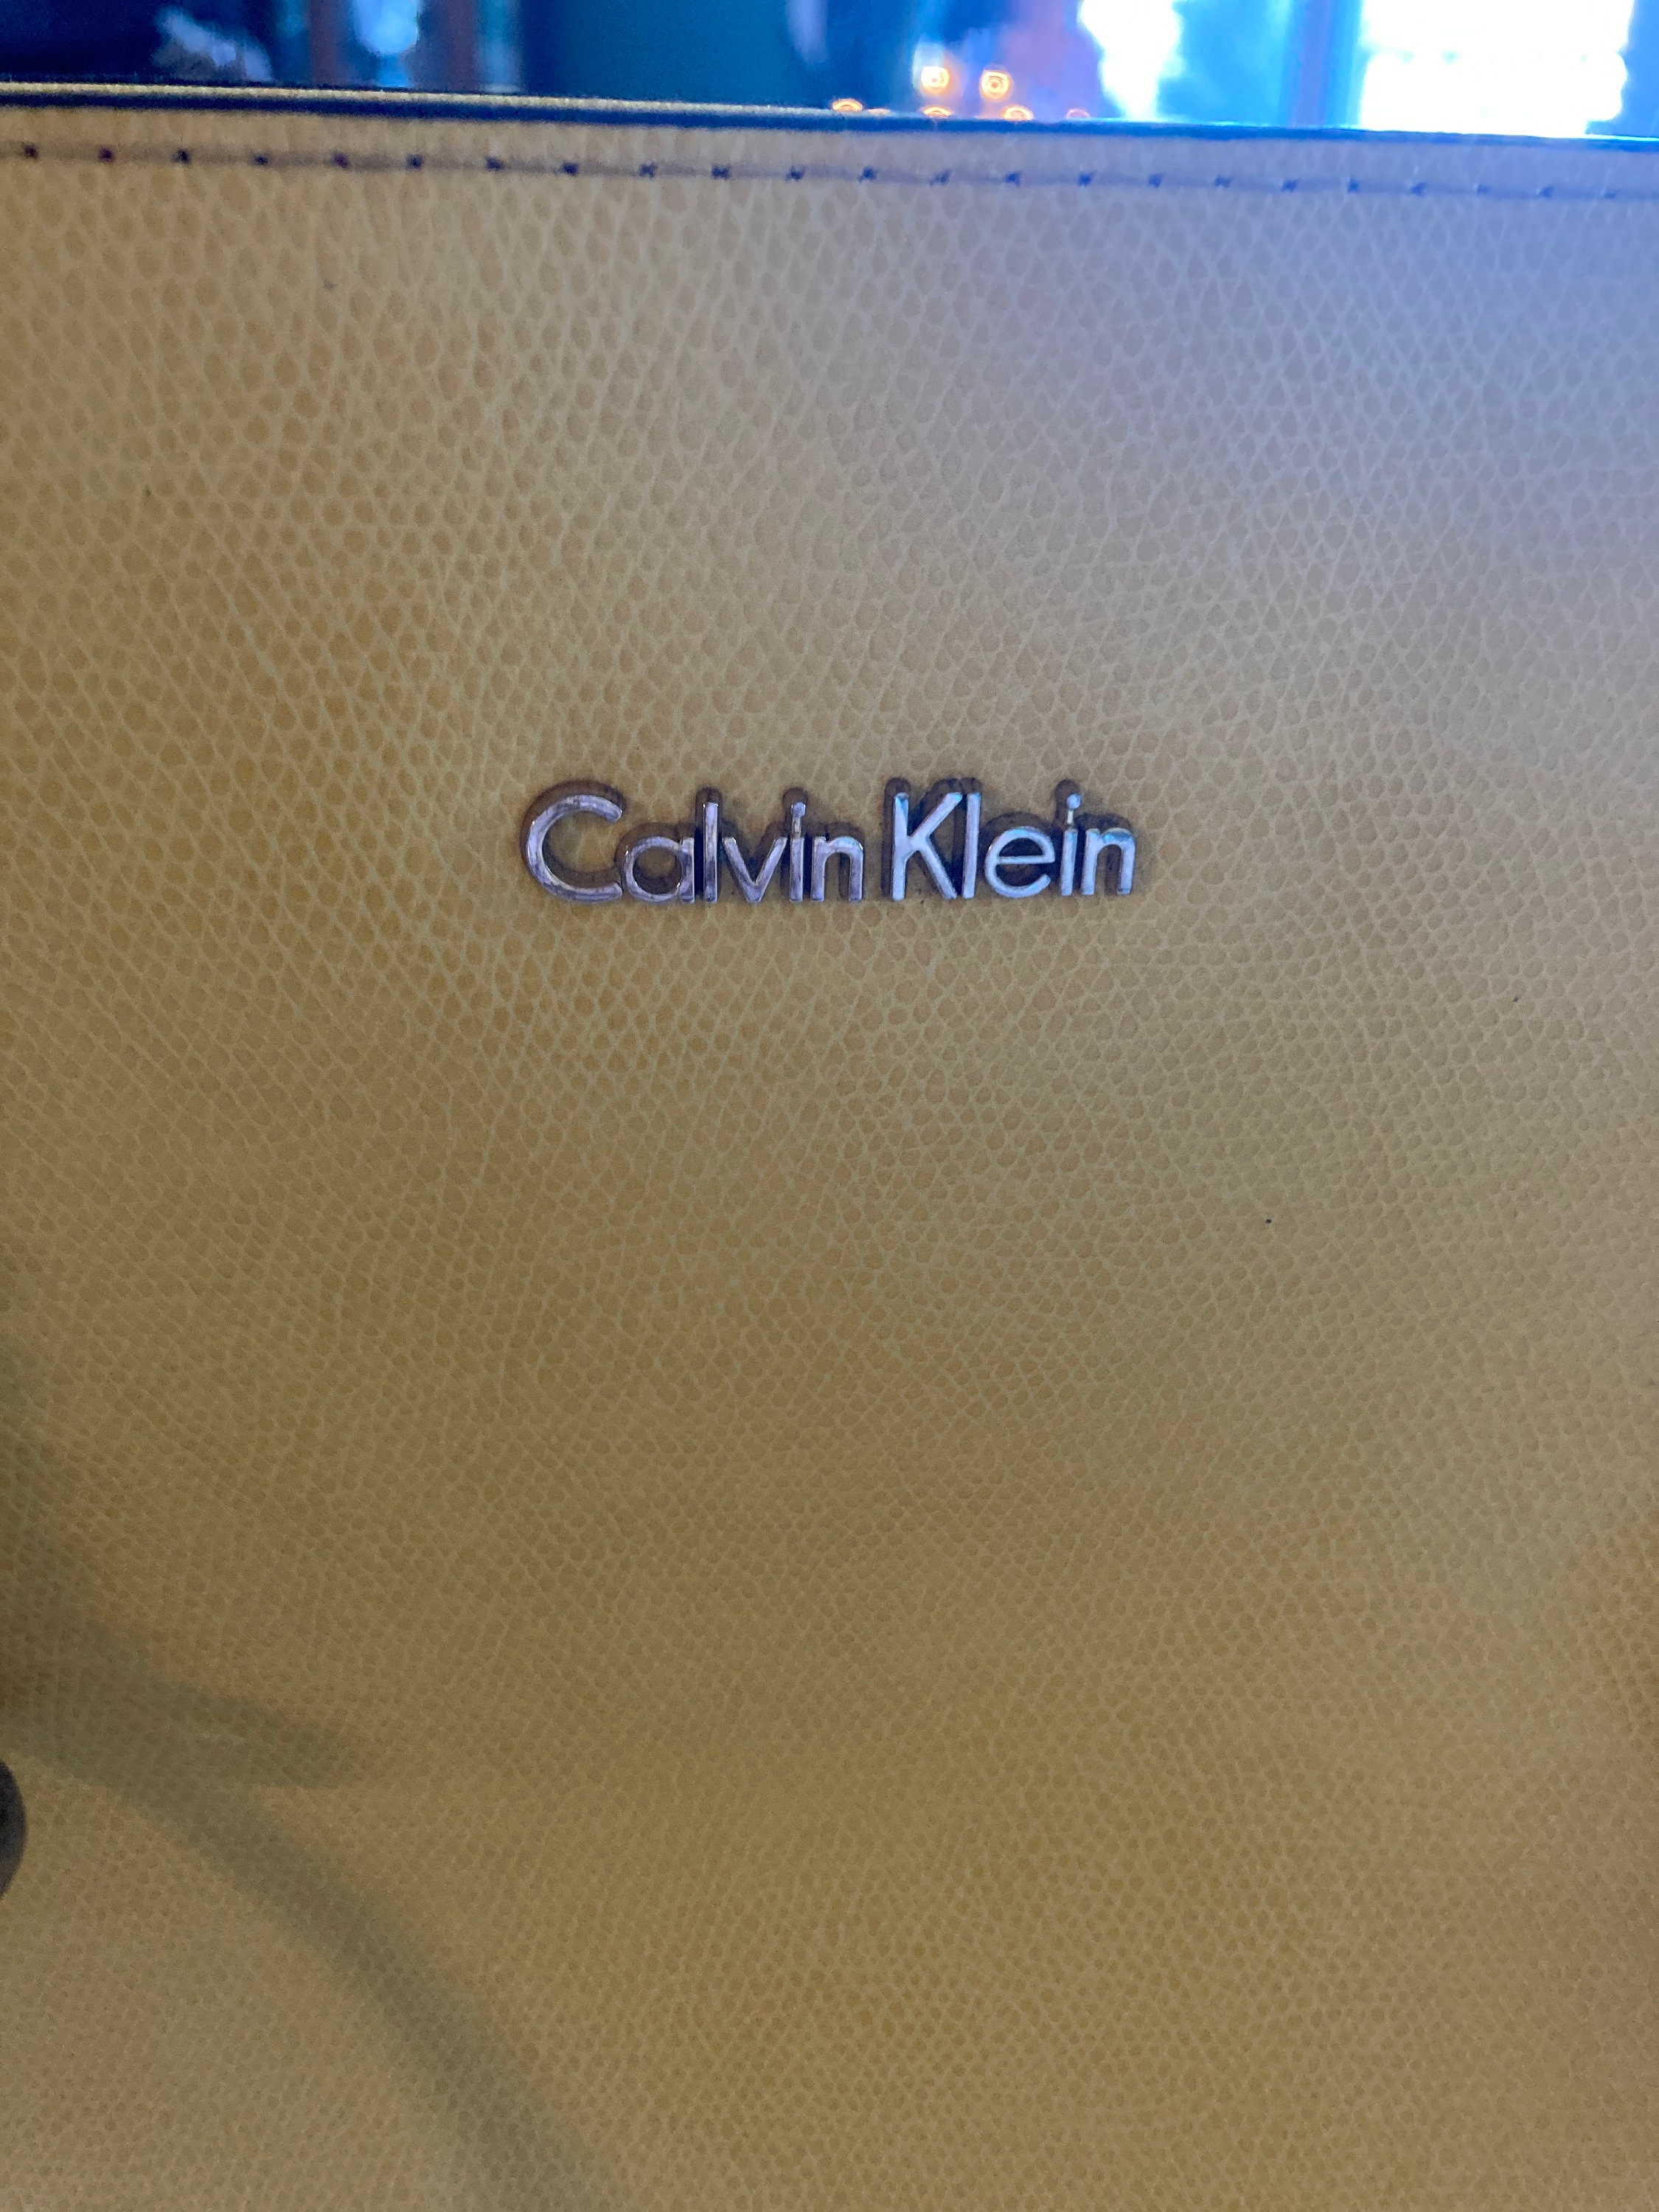 Calvin Klein Light Pink Shoulder Bag Purse With Gold Accents | eBay